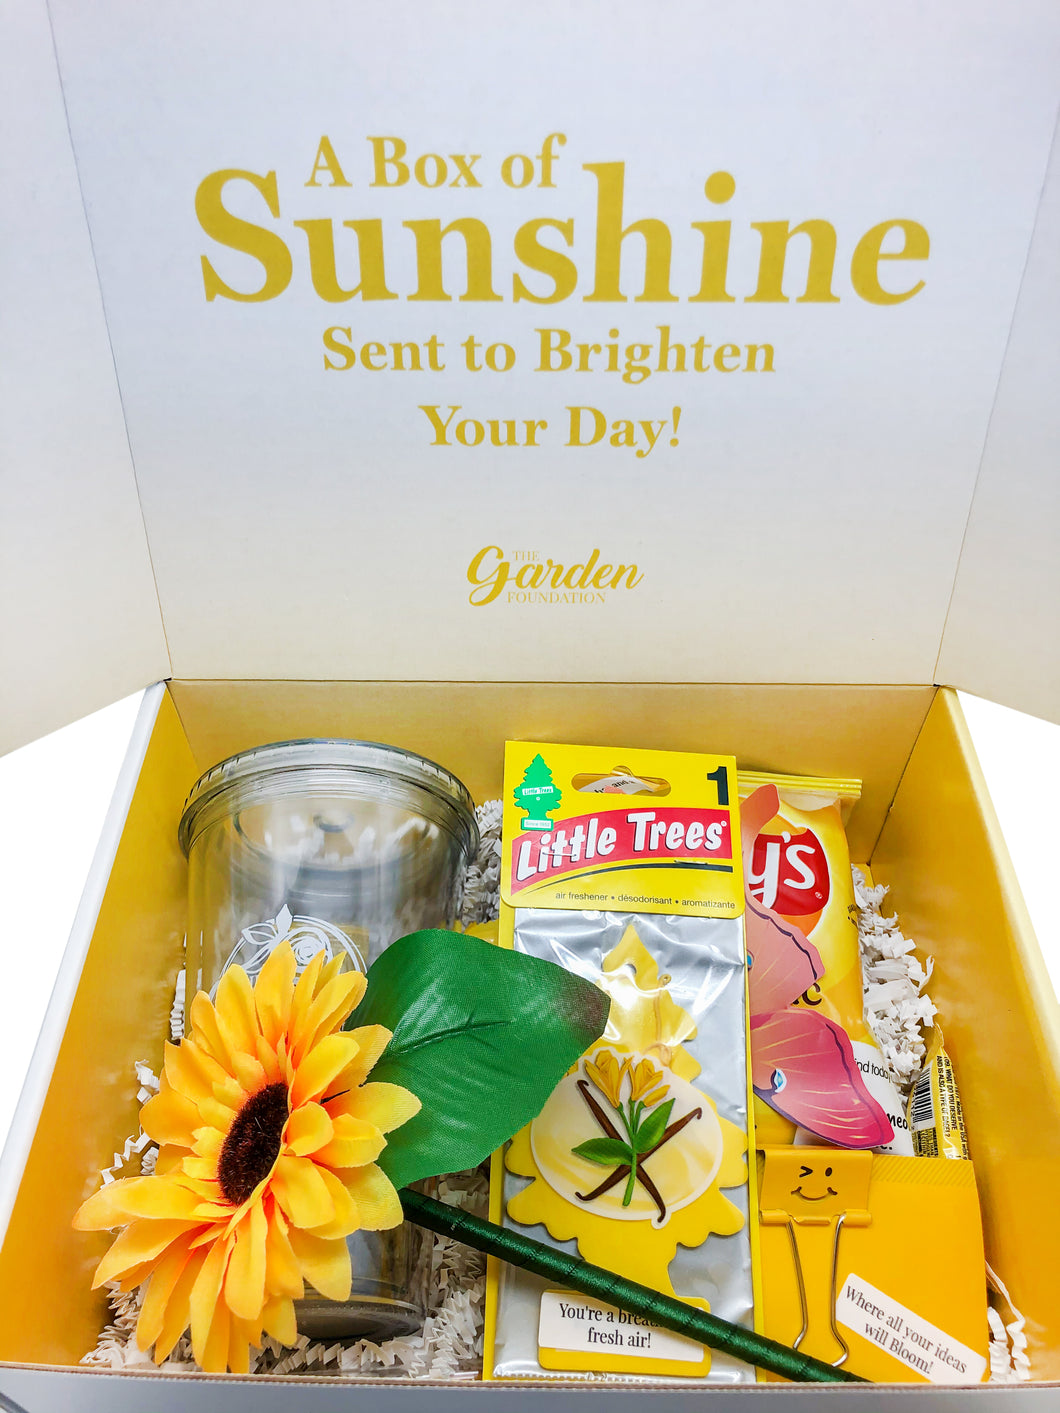 Box of Sunshine - The Garden Foundation